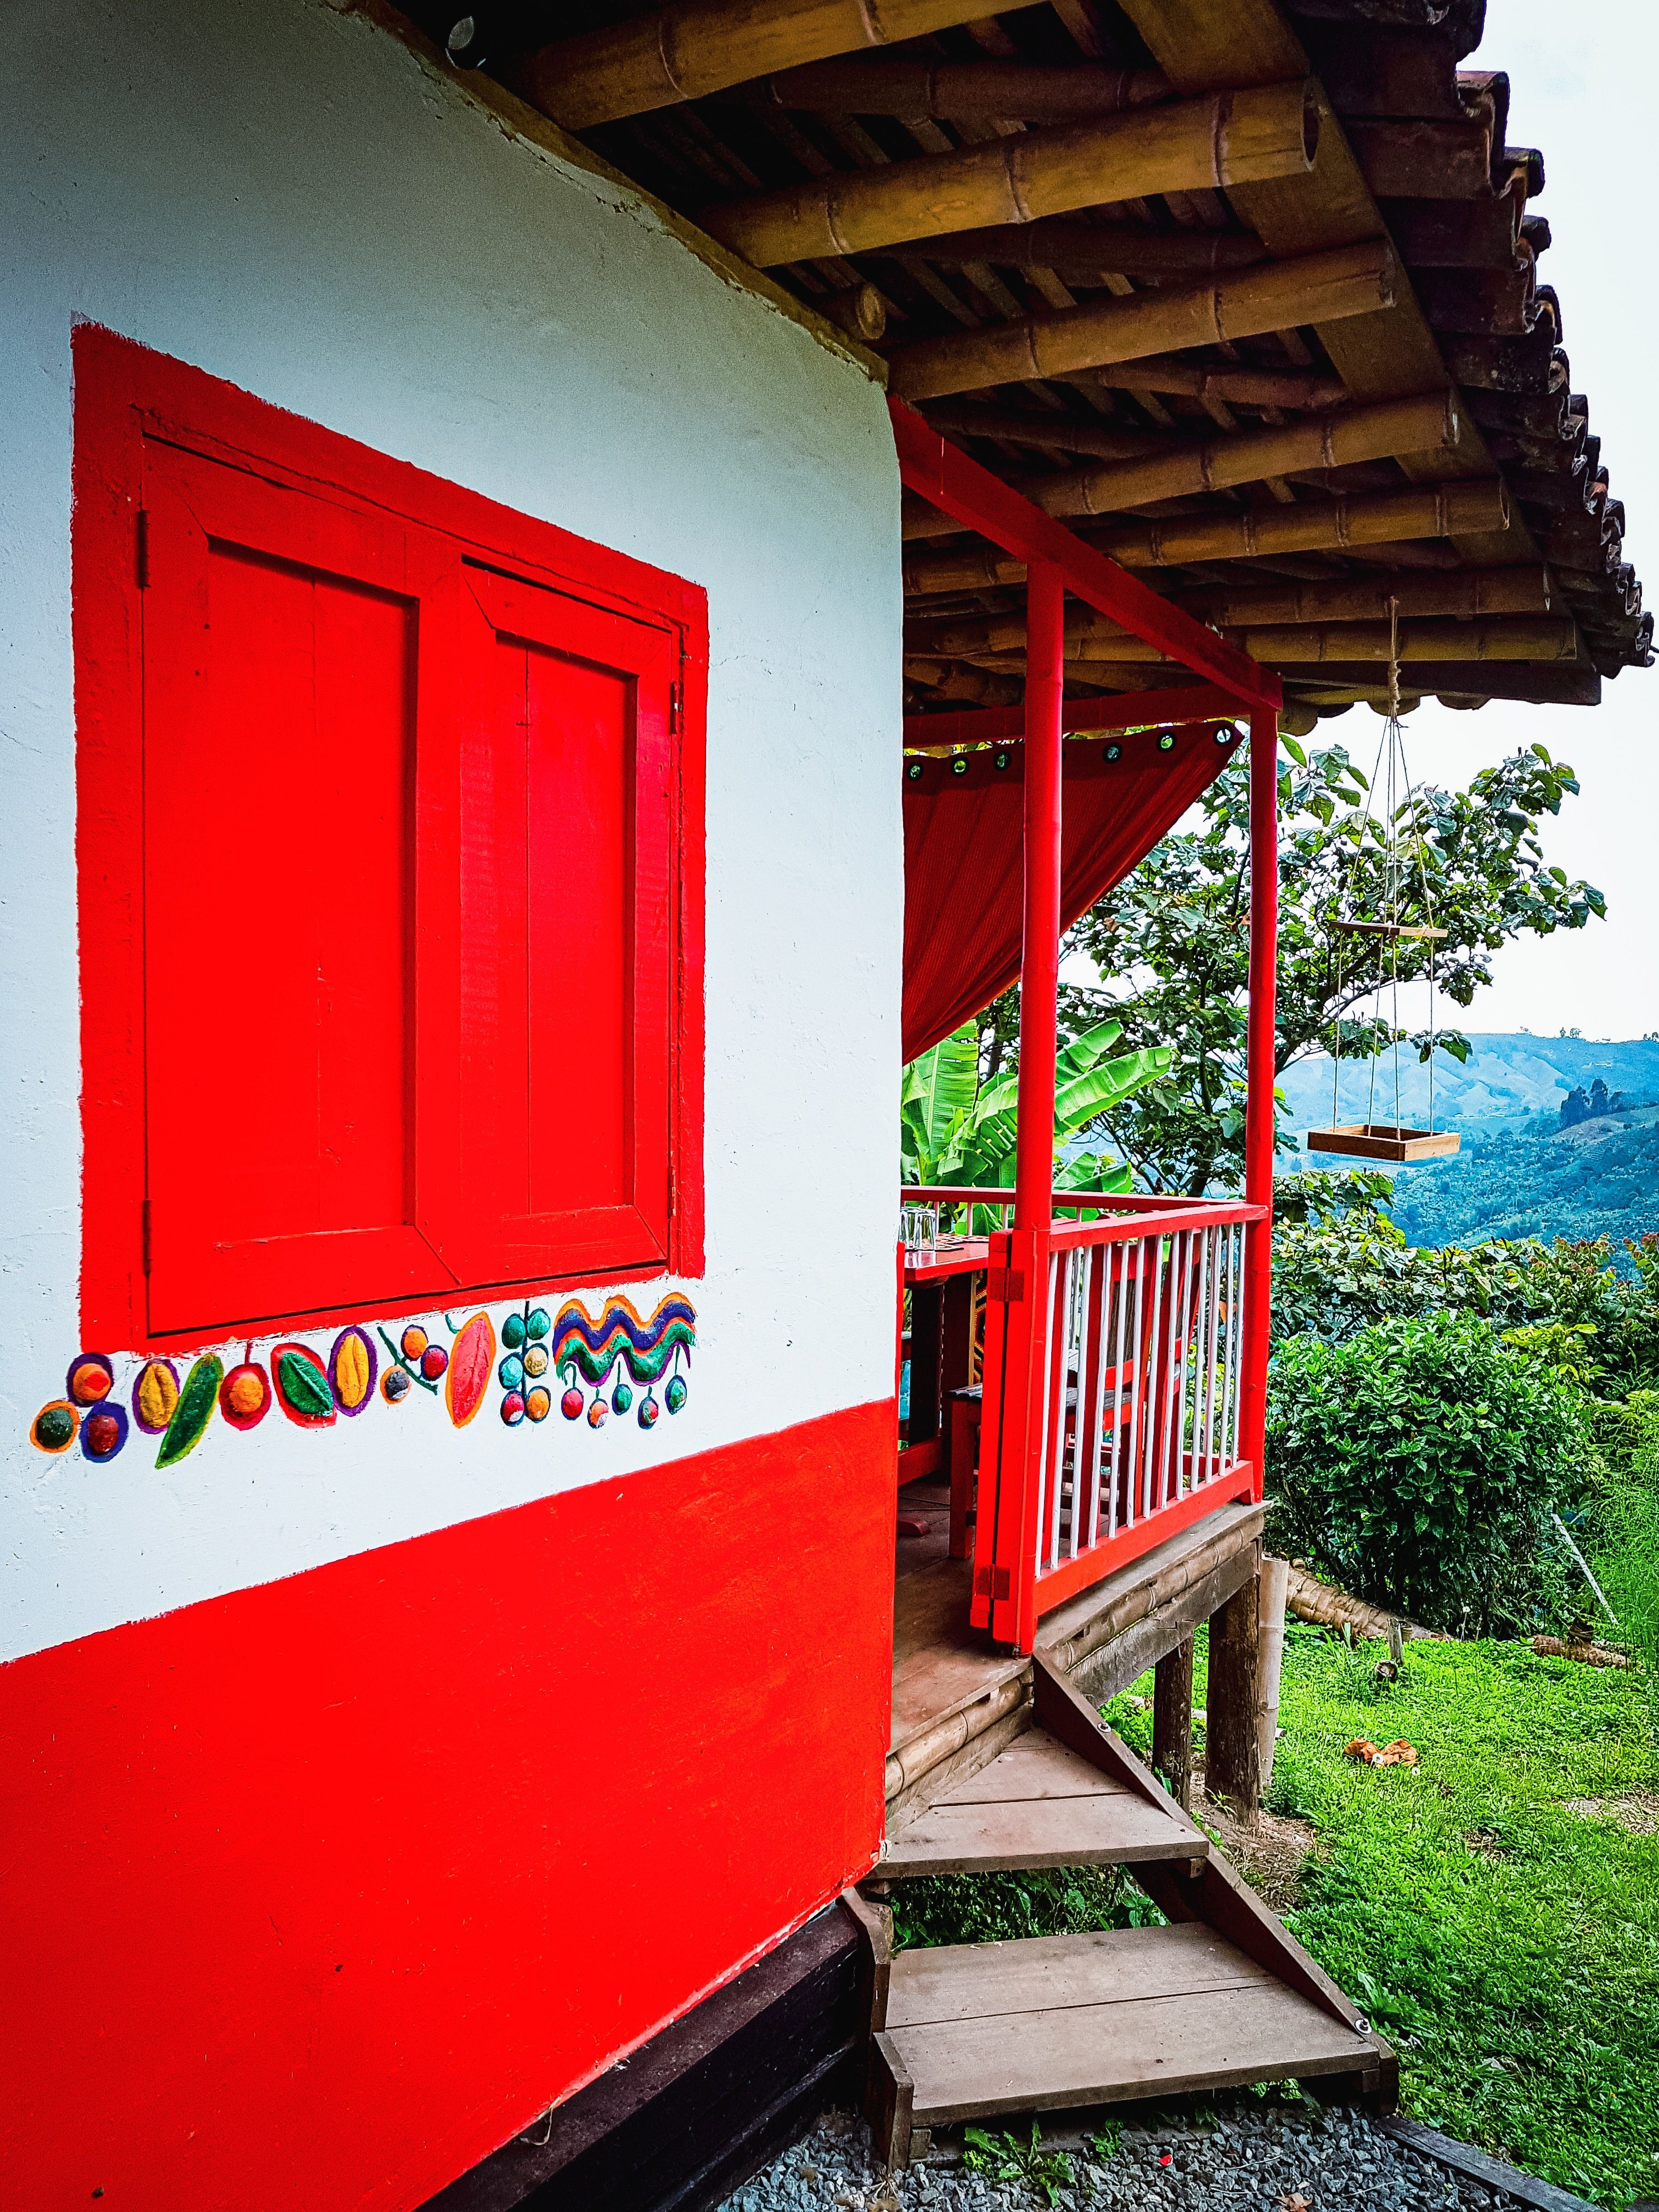 Coffee farm in Colombia 